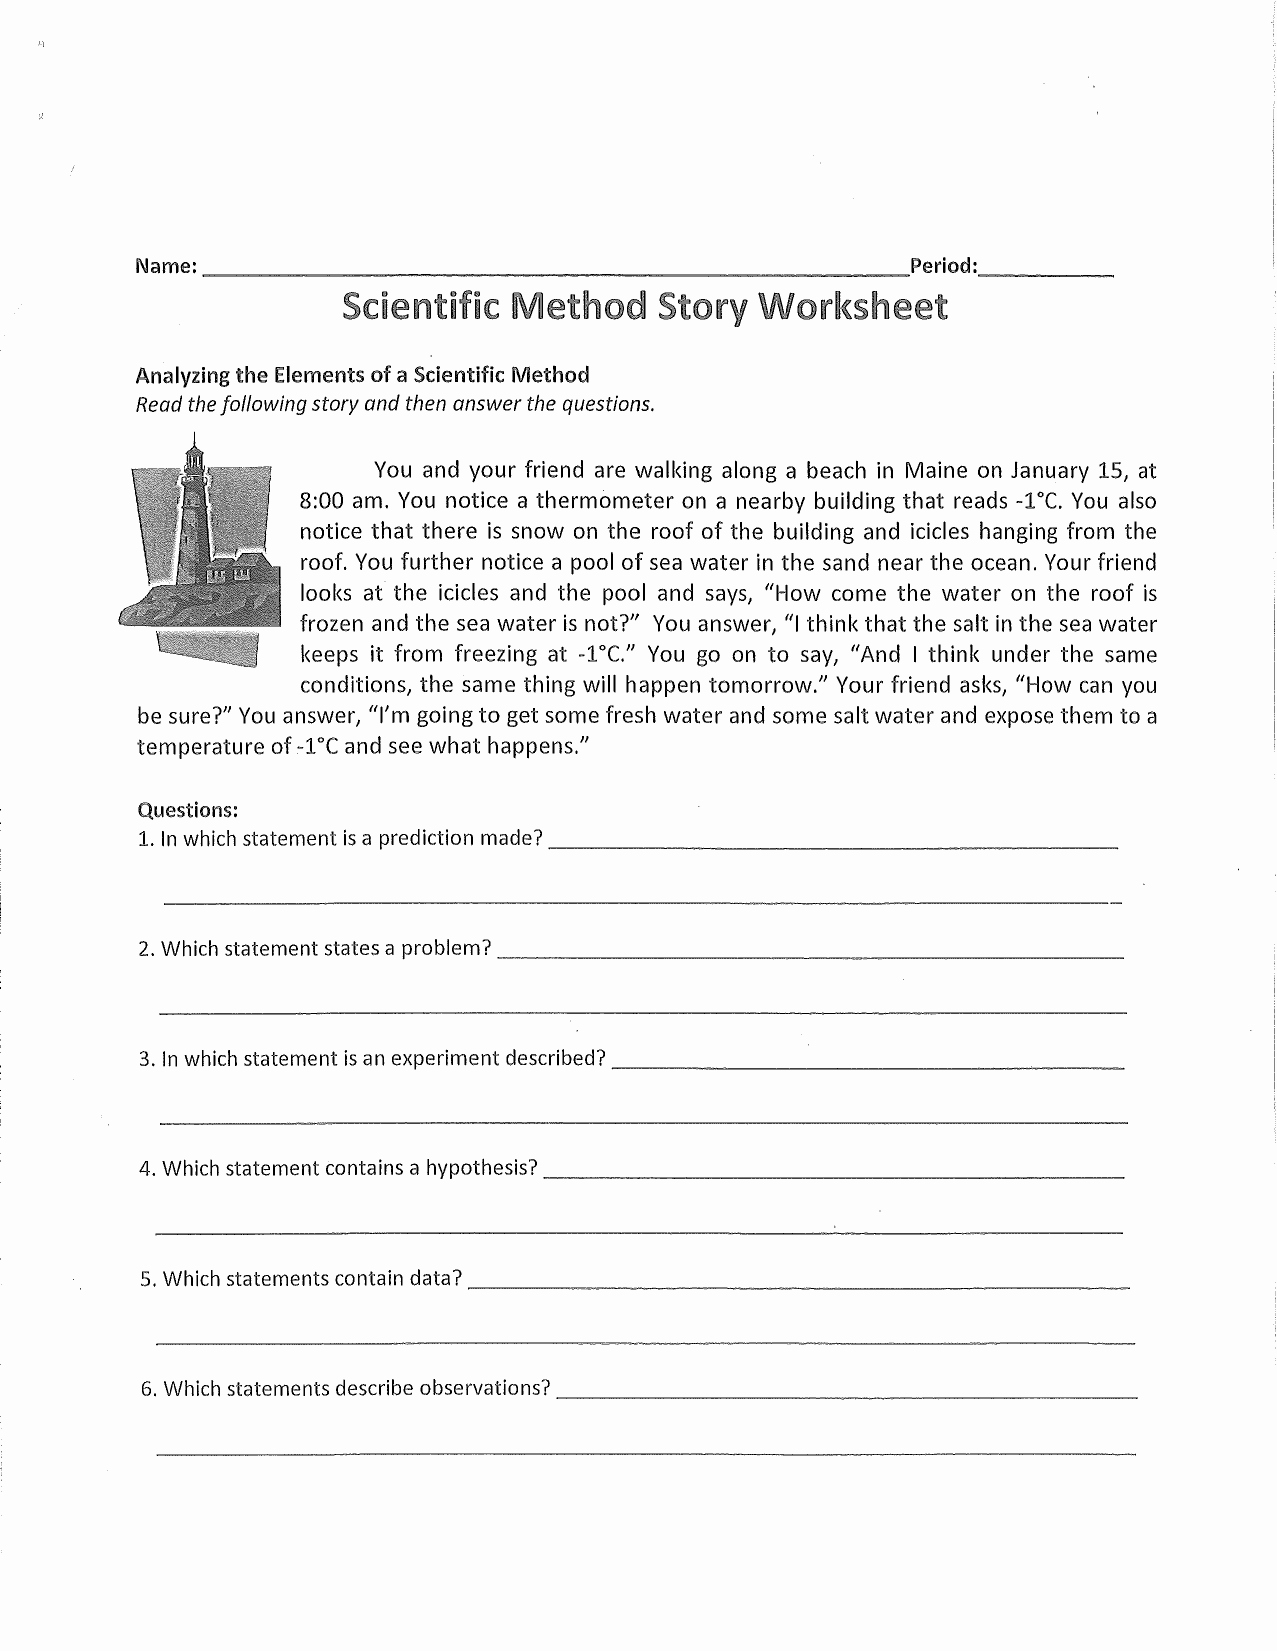 Scientific Method Worksheet Answers New Scientific Method Story Worksheet